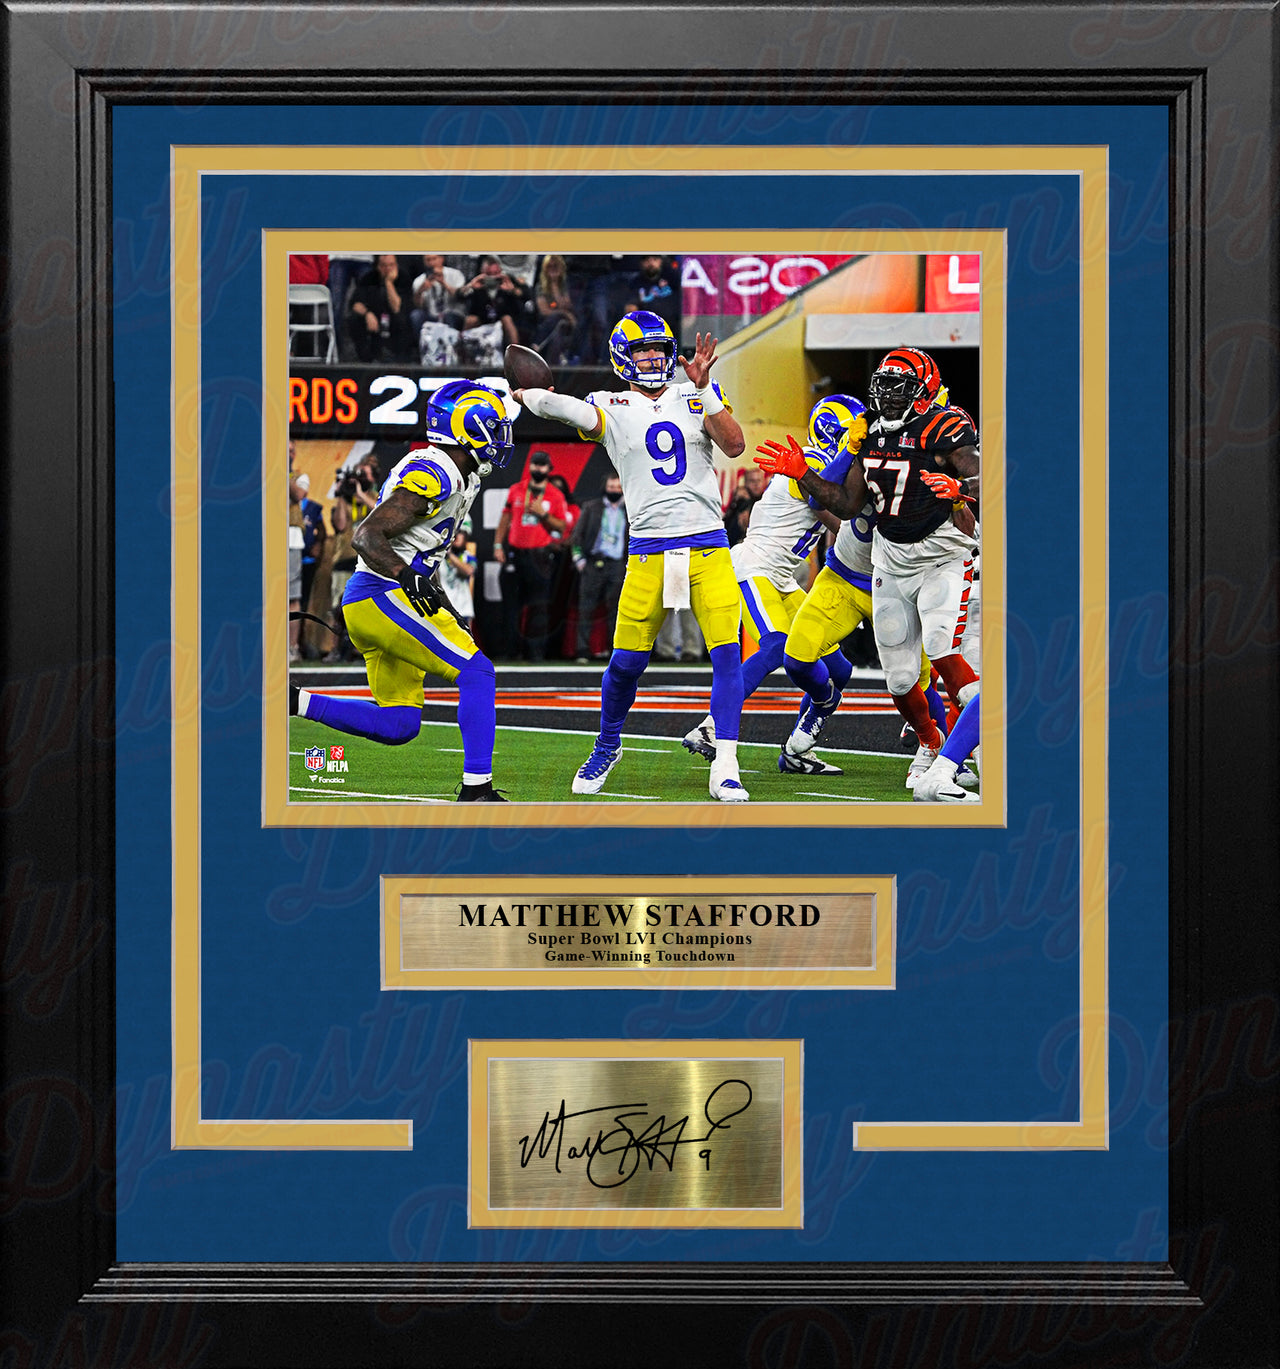 Matthew Stafford Game-Winning TD Super Bowl LVI LA Rams 8x10 Framed Photo with Engraved Autograph - Dynasty Sports & Framing 